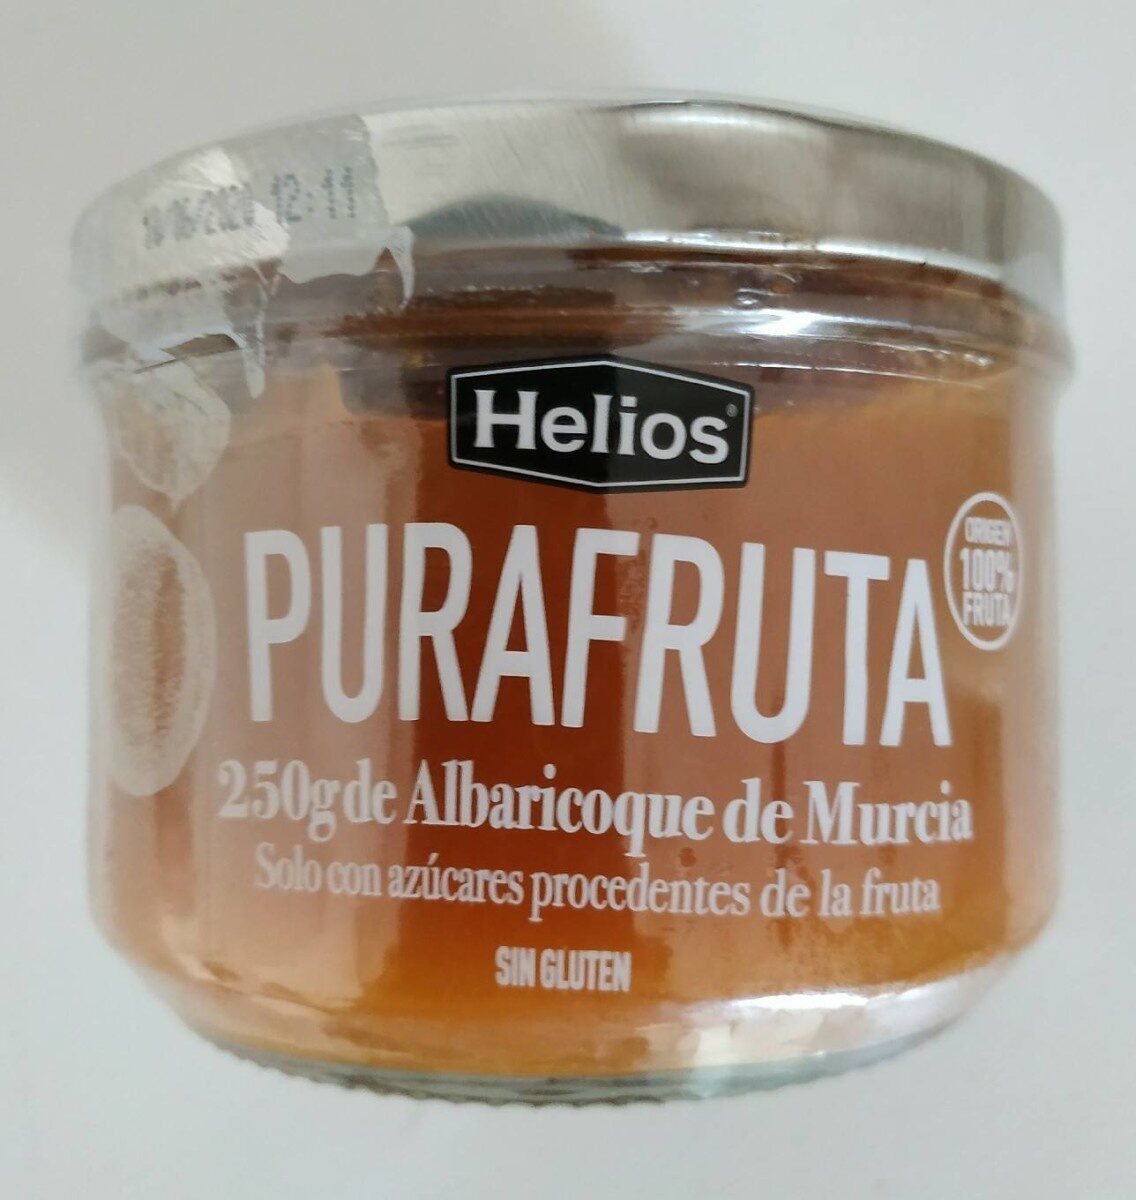 Purafruta mermelada de albaricoque de Murcia - Producte - es